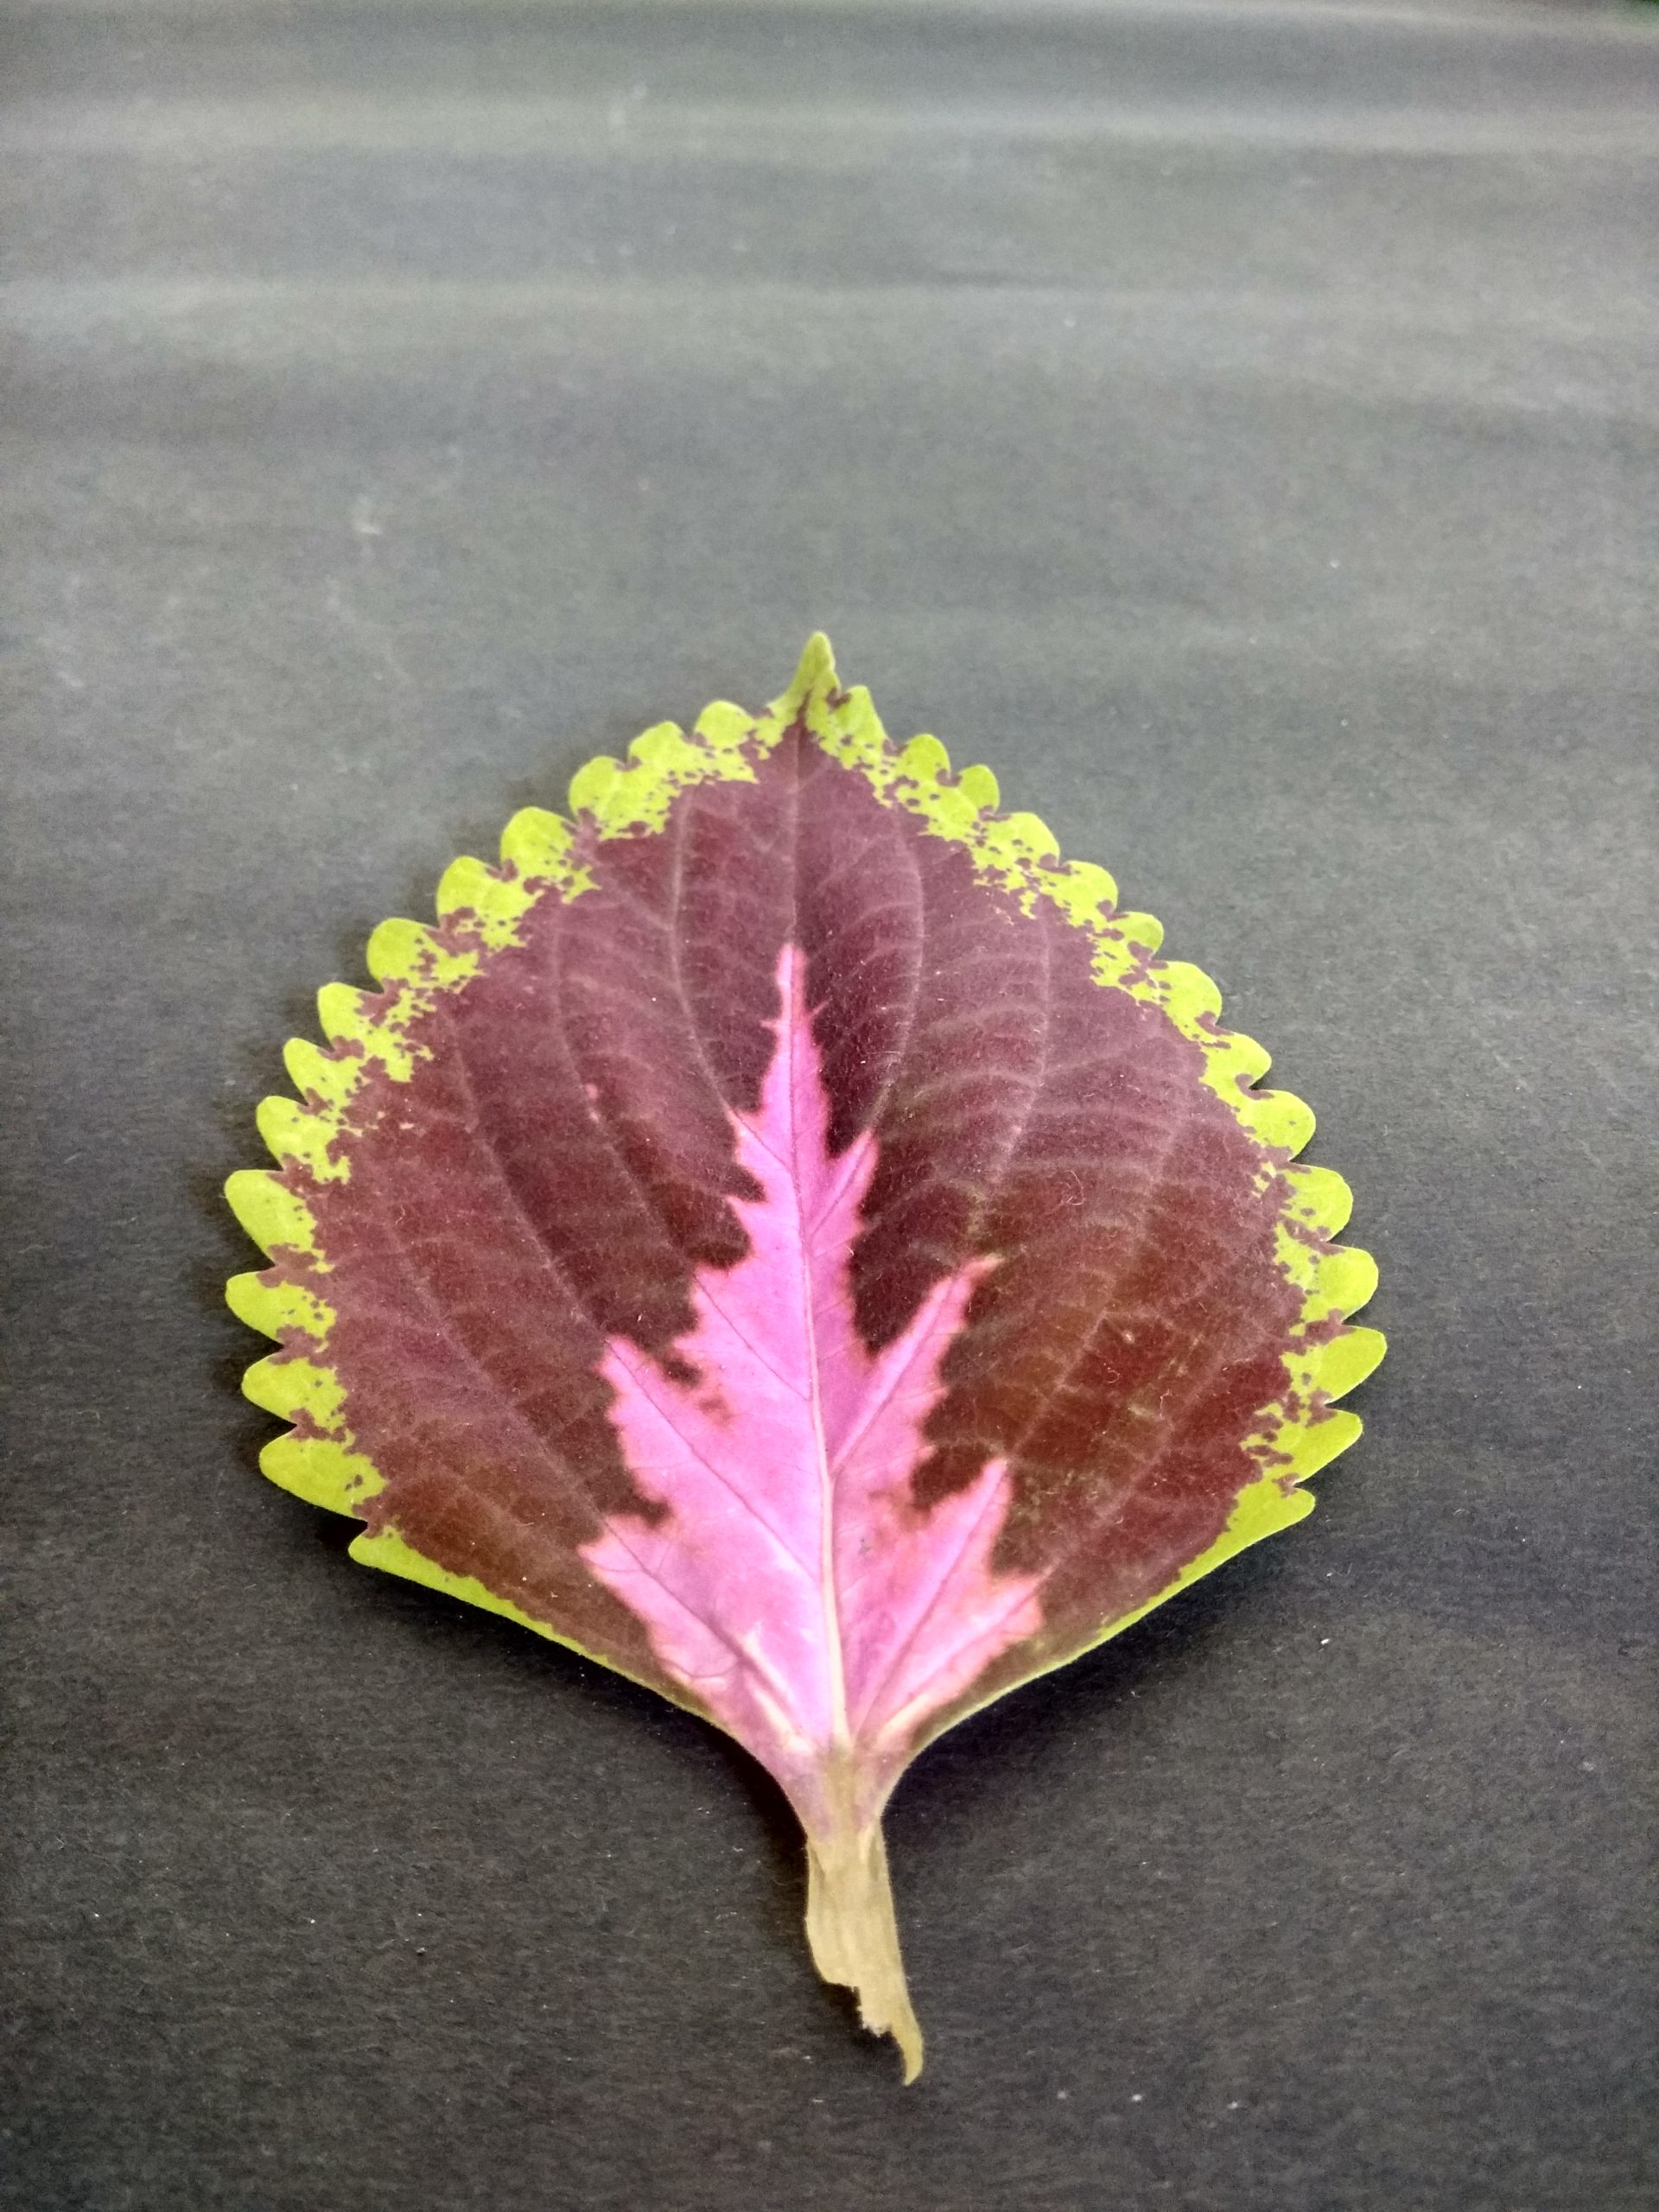 A colorful leaf